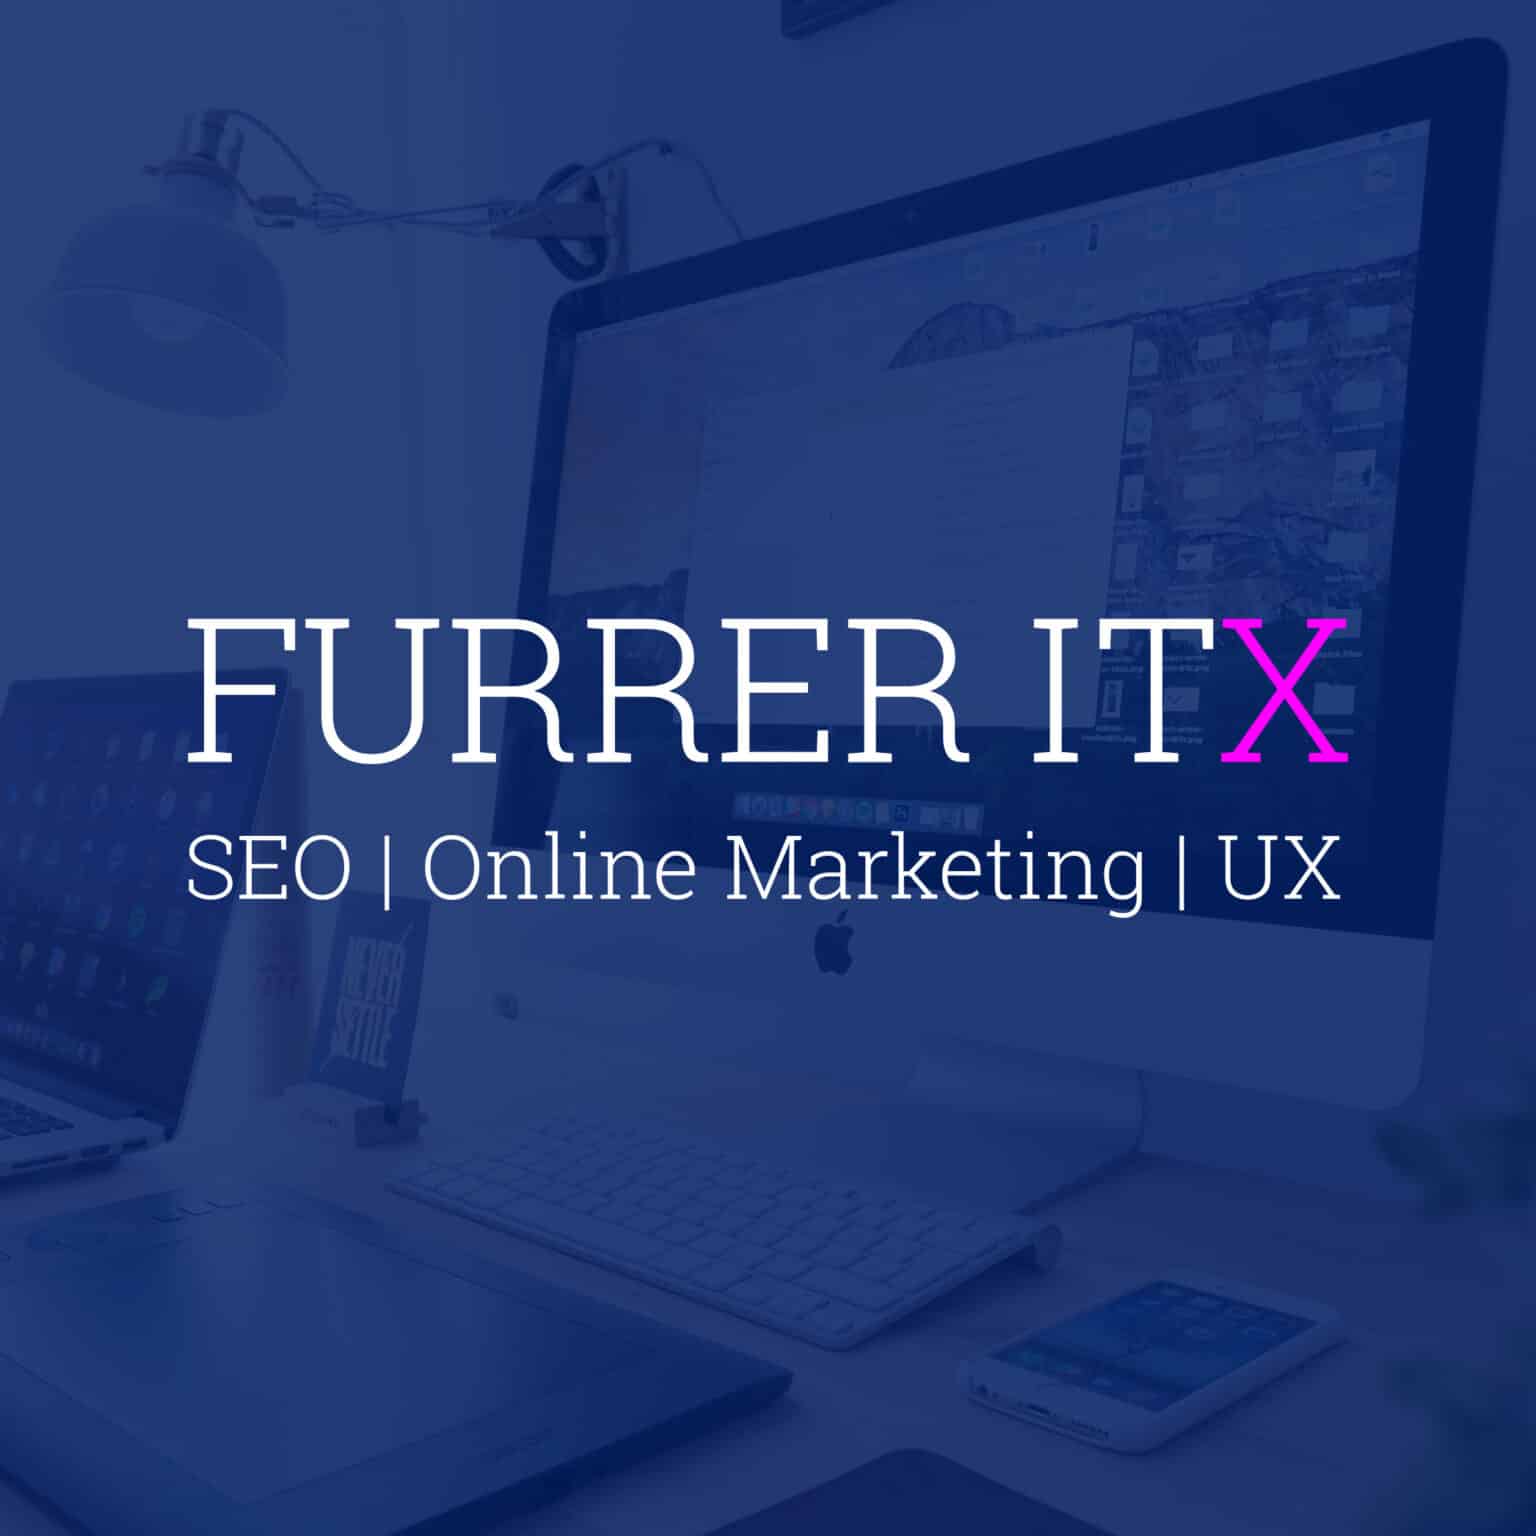 FURRER ITX | SEO - Online Marketing - UX